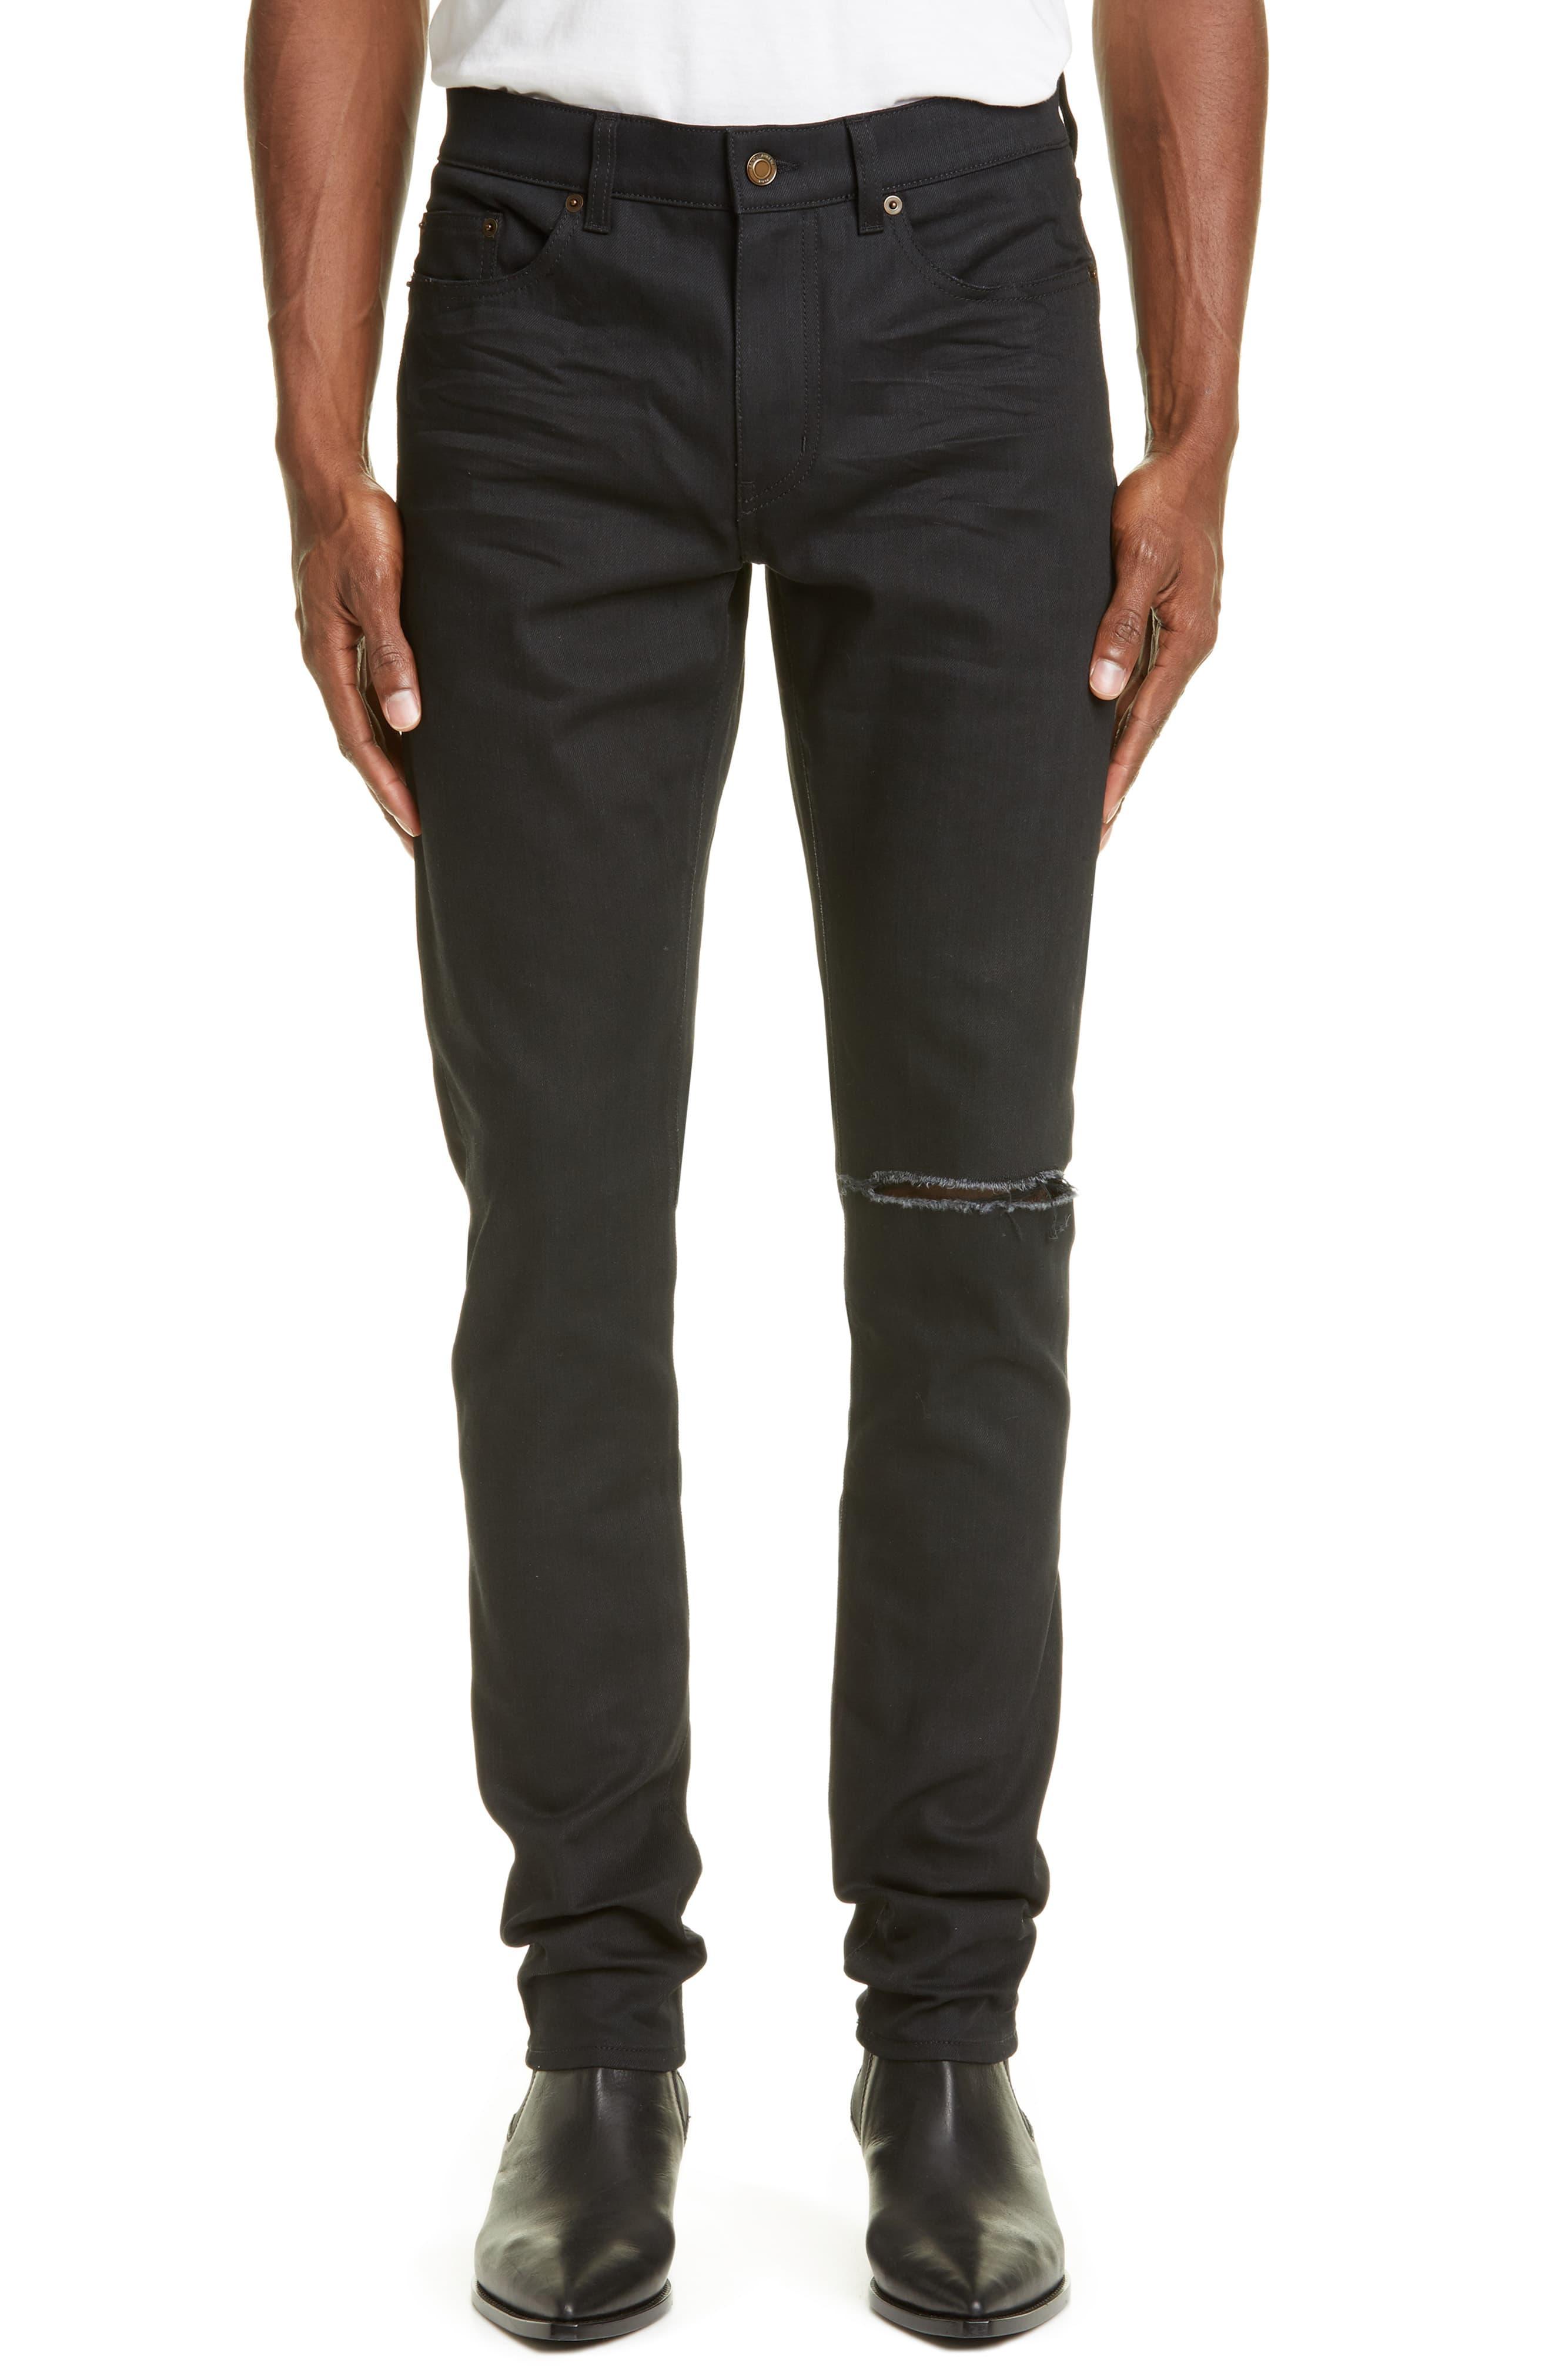 Saint Laurent Denim Ripped Black Skinny Fit Jeans for Men - Lyst